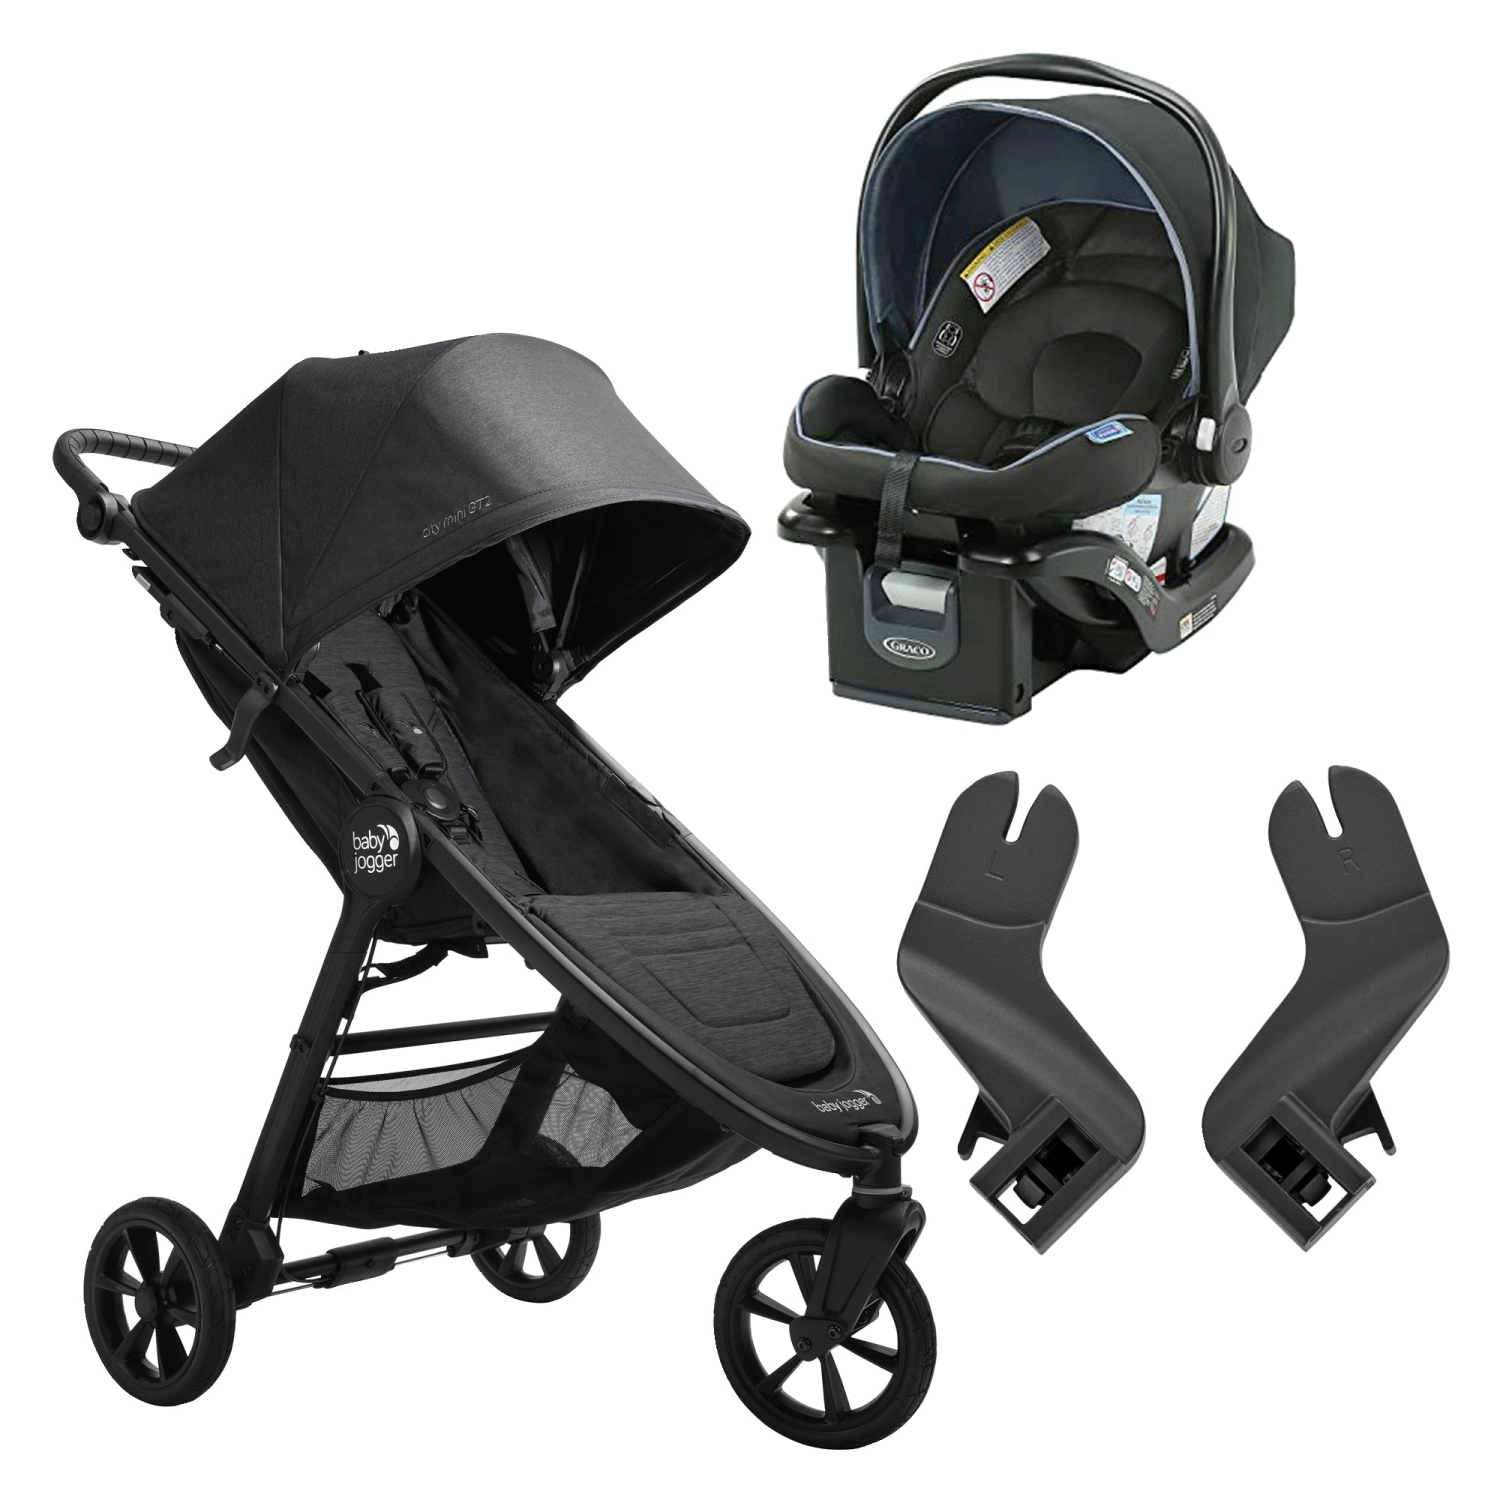 Mini kit 100, baby jogger city min gt2 + infant car seat ontario + car seat adaptor, black